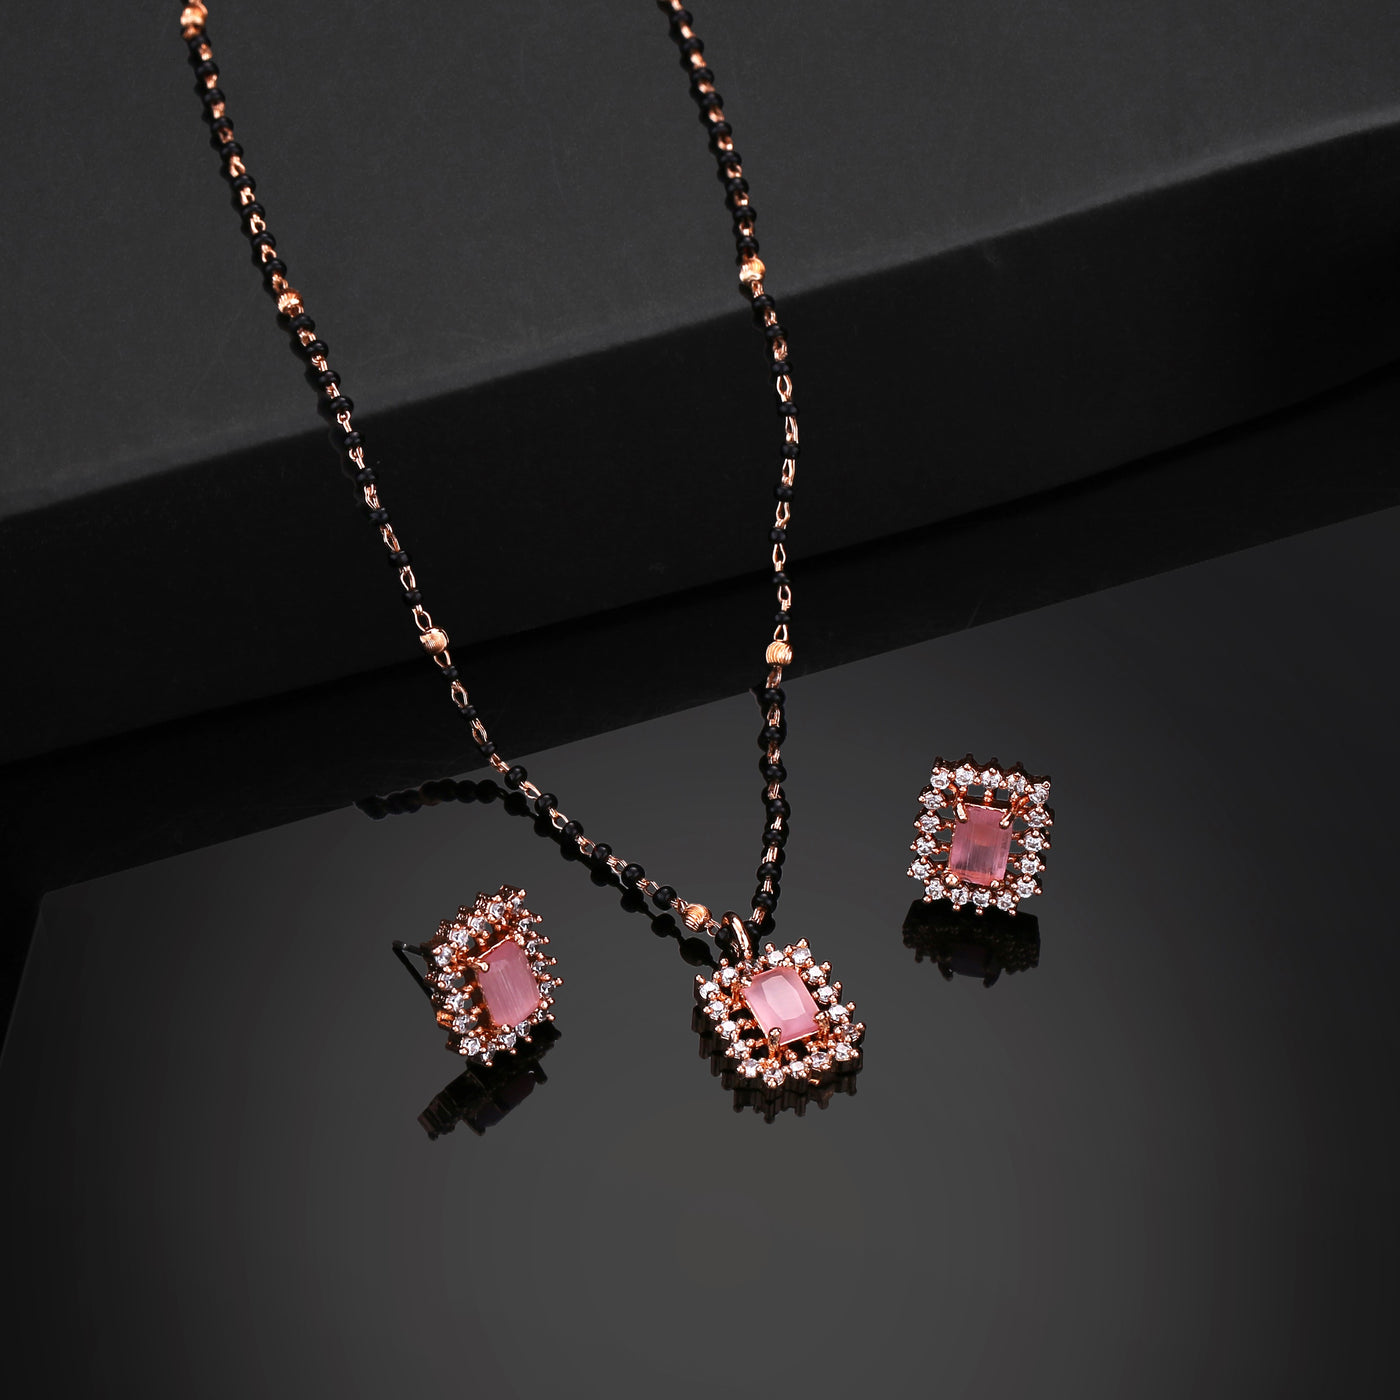 Estele Rose Gold Plated CZ Square Designer Mangalsutra Necklace Set with Mint Pink Stones for Women